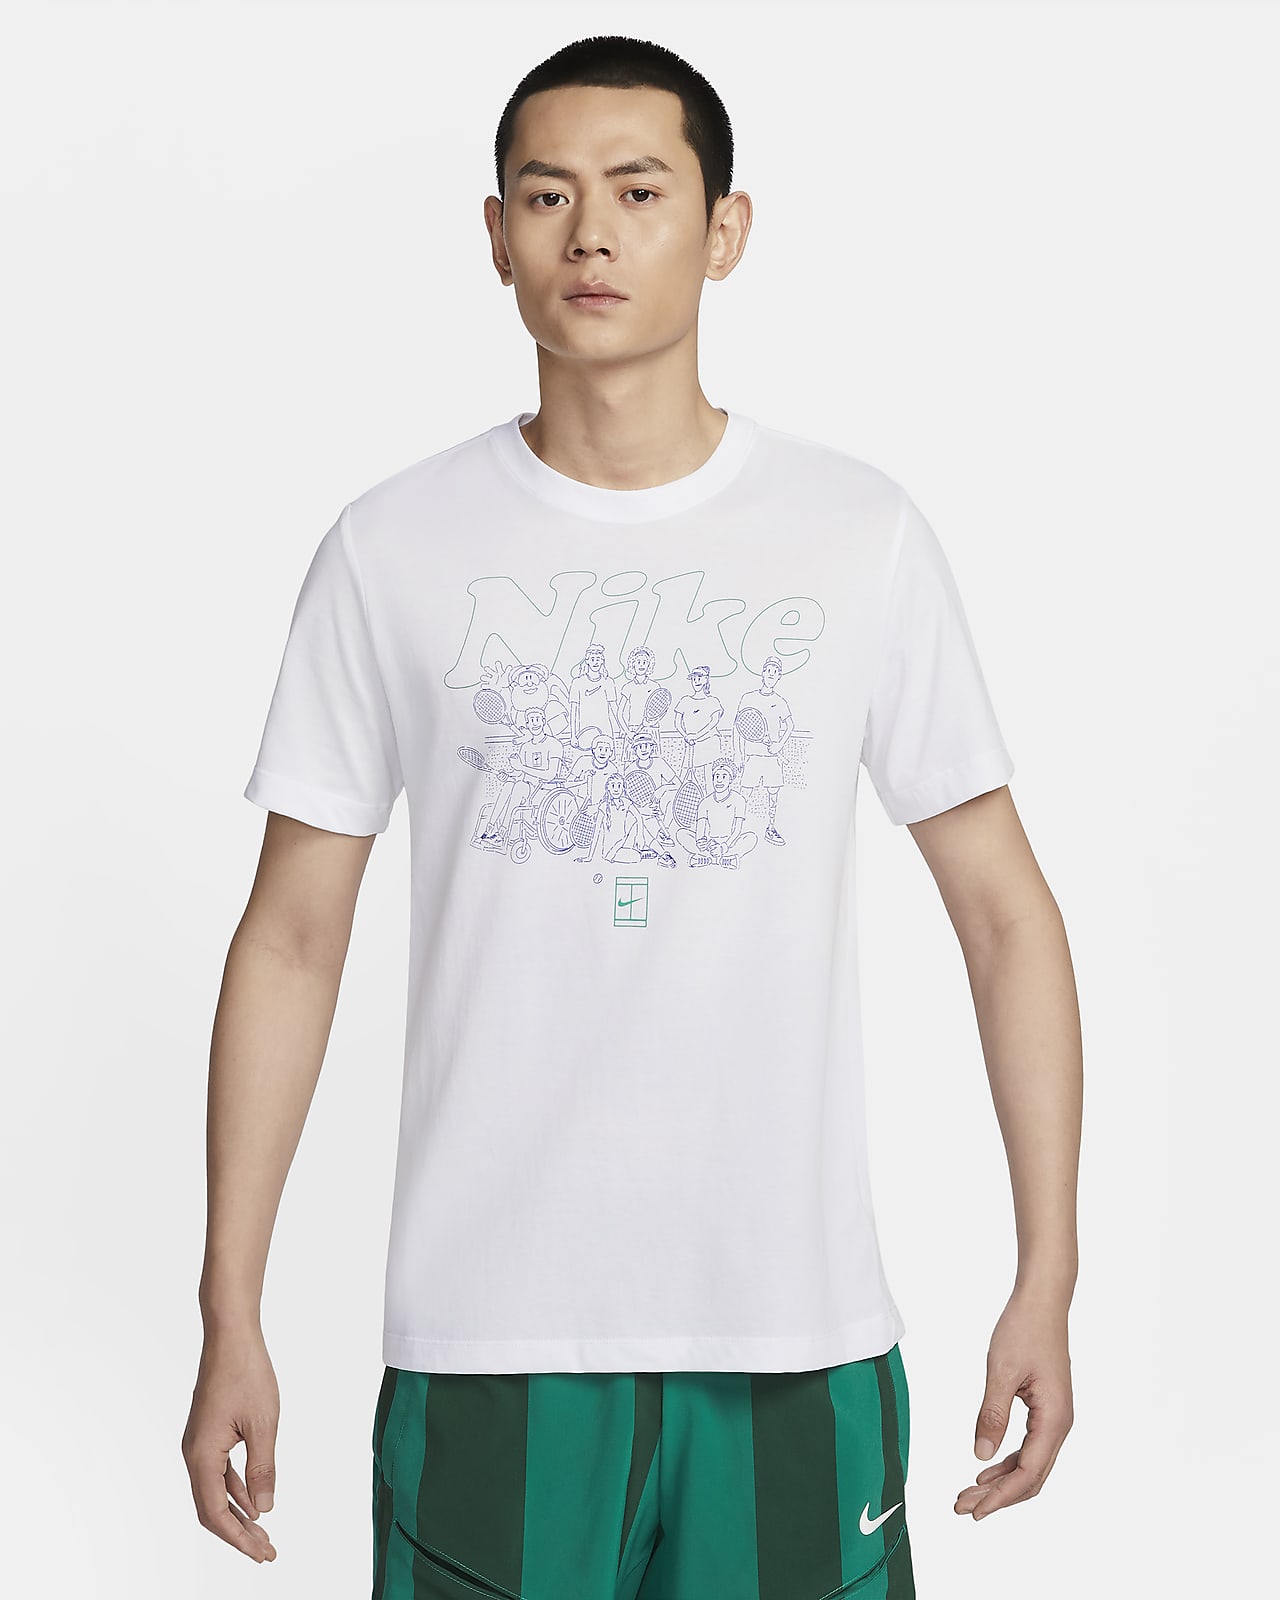 NIKE公式】ナイキコート メンズ Dri-FIT テニス Tシャツ.オンライン